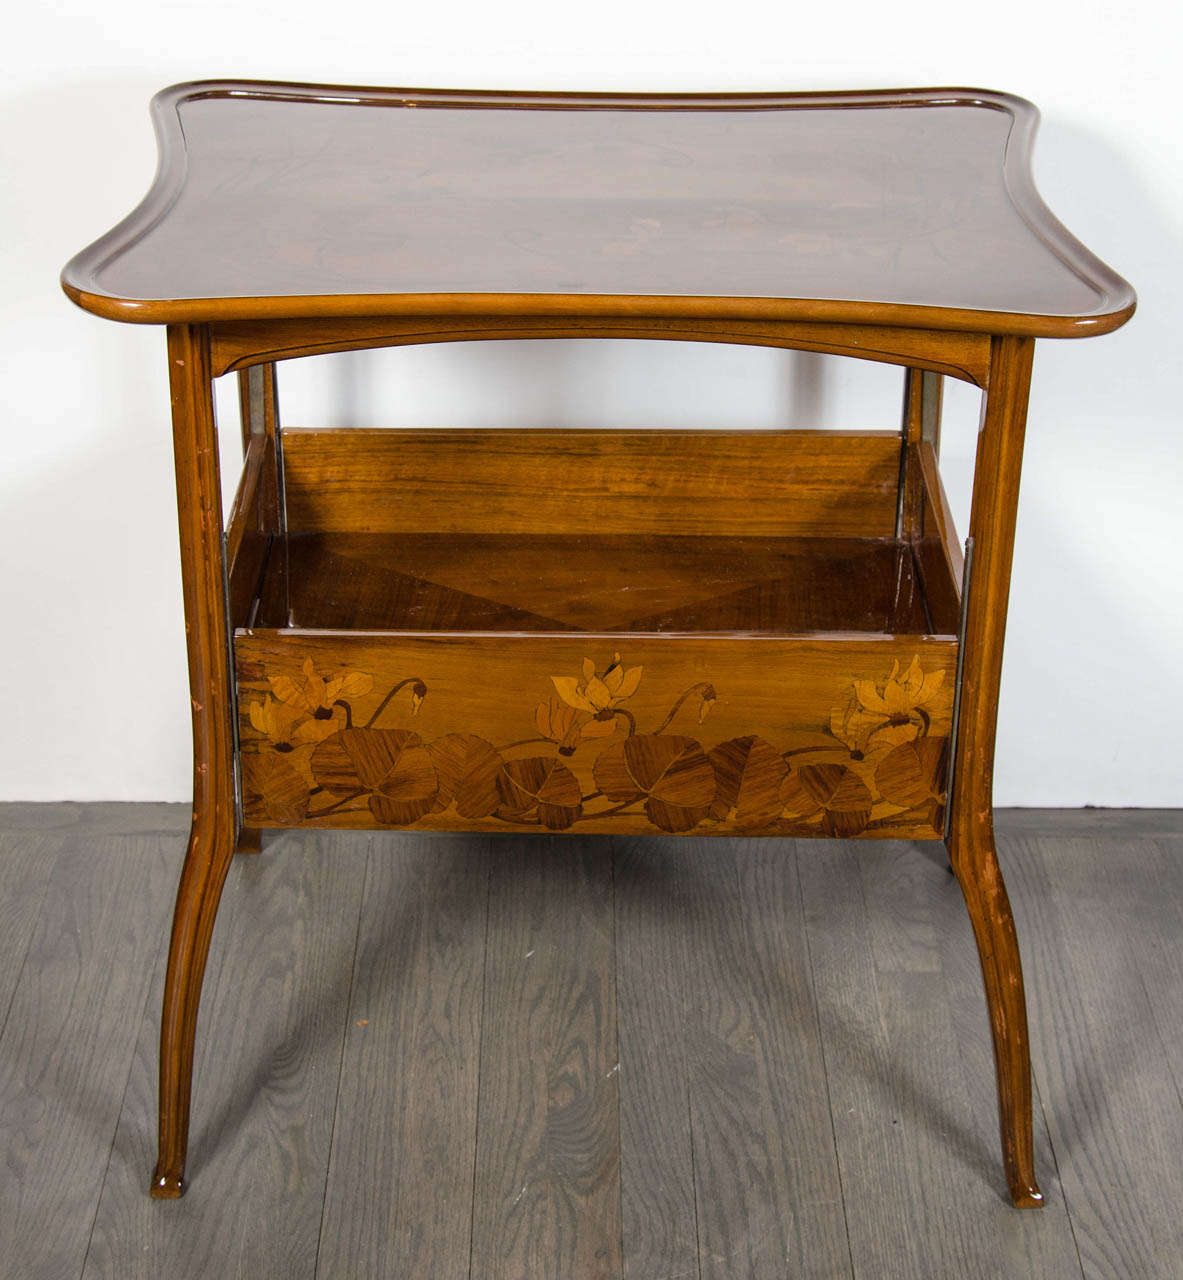 French Exquisite Art Nouveau Carved Walnut Tea Table by Louis Majorelle